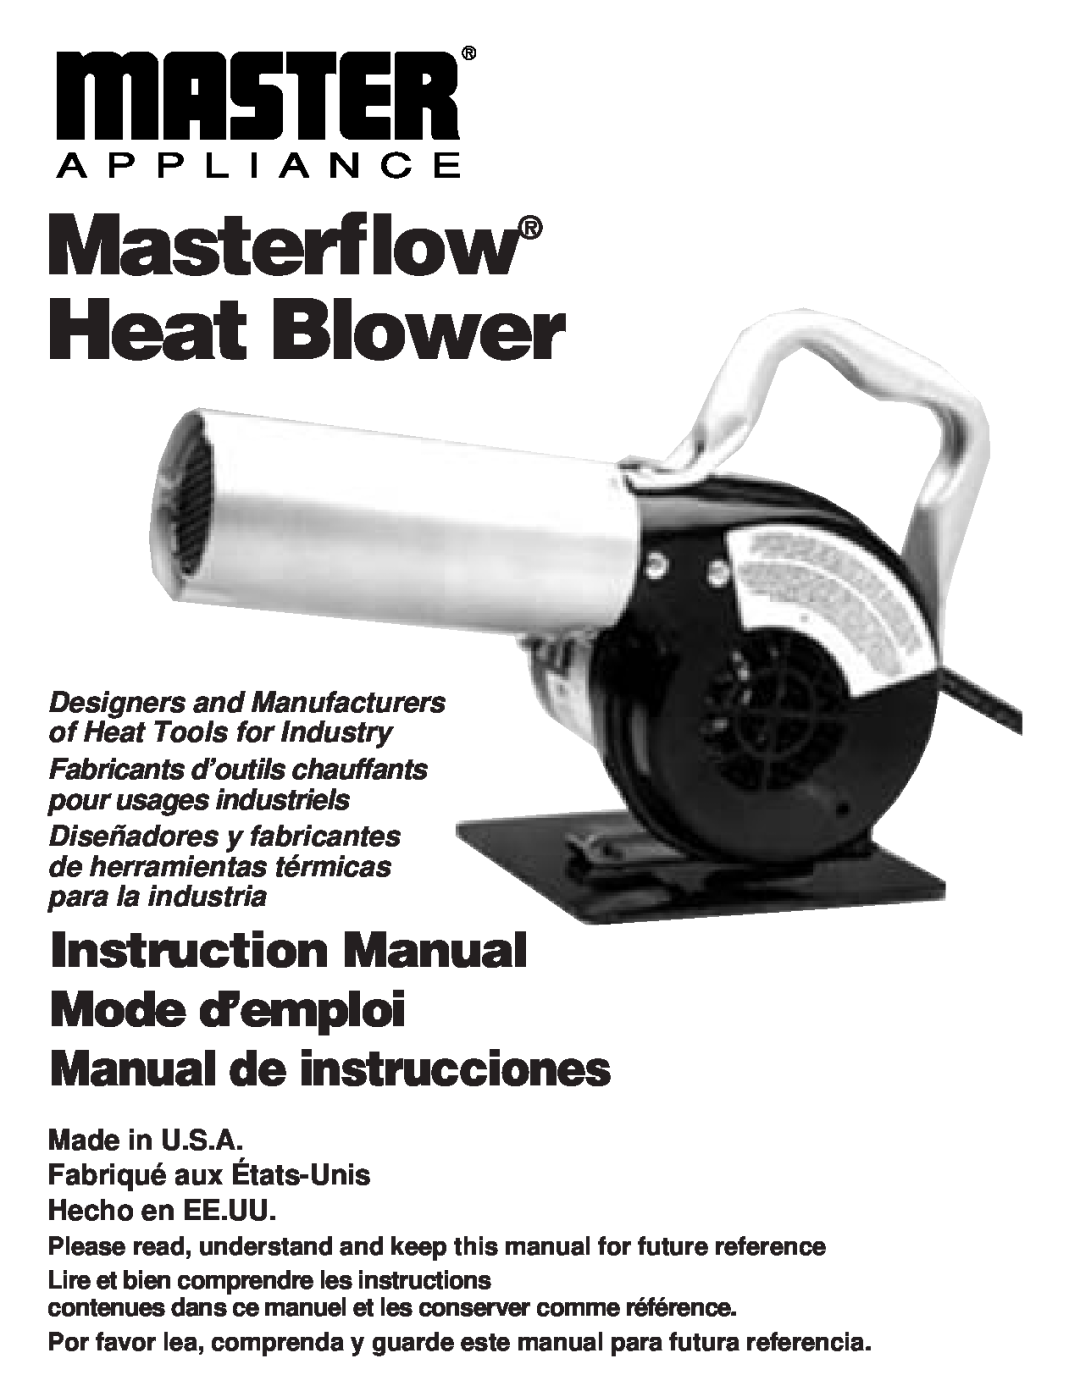 Master Appliance Heat Blower instruction manual Made in U.S.A Fabriqué aux États-Unis, Hecho en EE.UU 